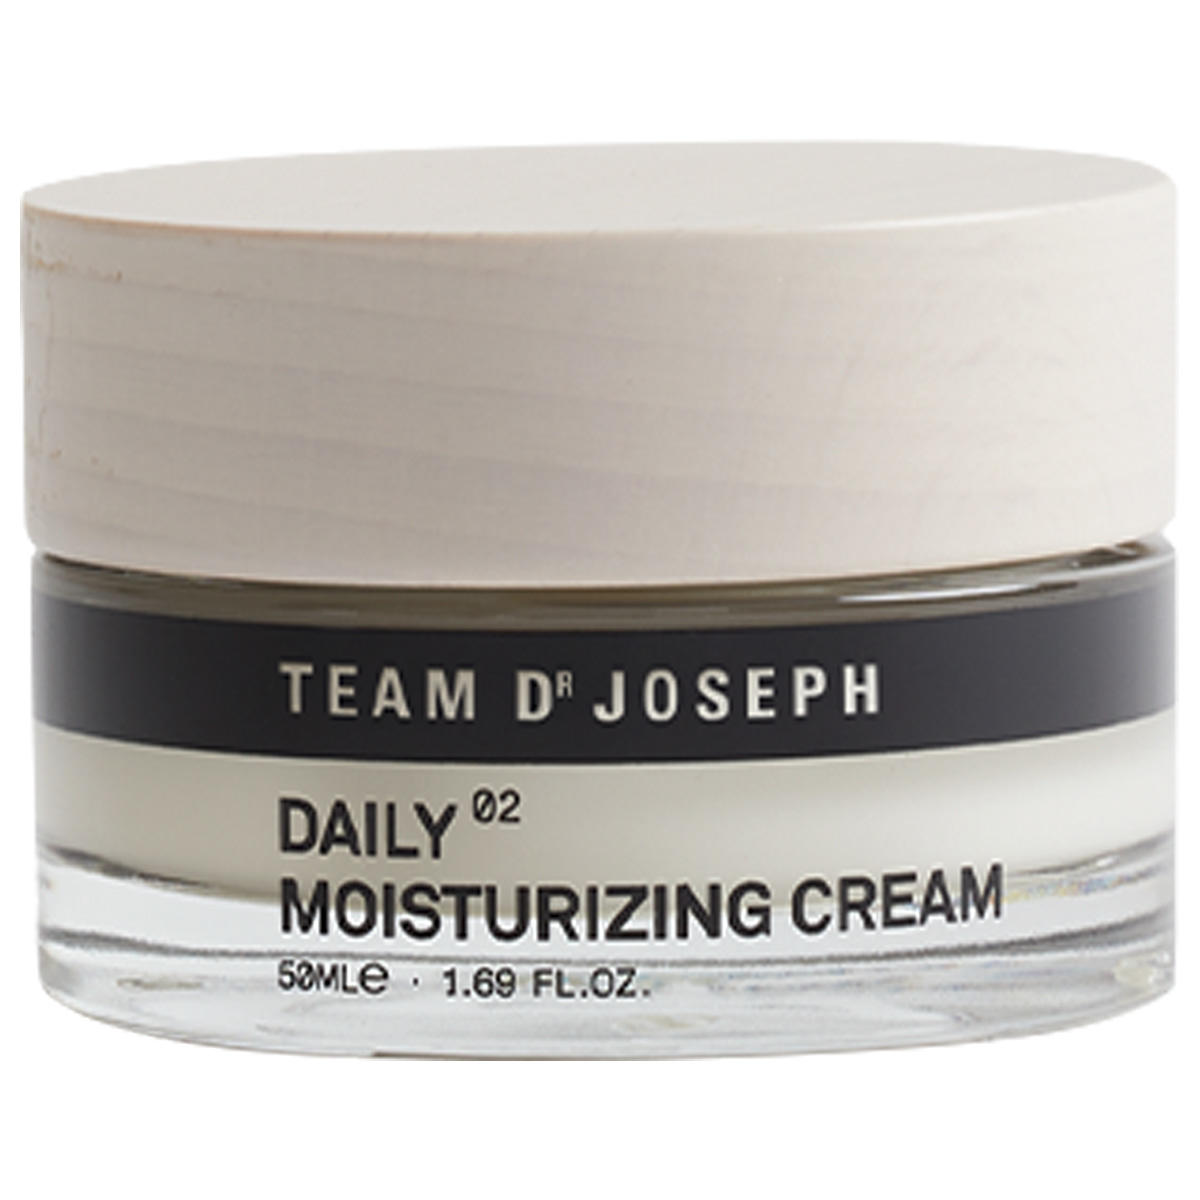 TEAM DR JOSEPH Daily Moisturizing Cream  - 1